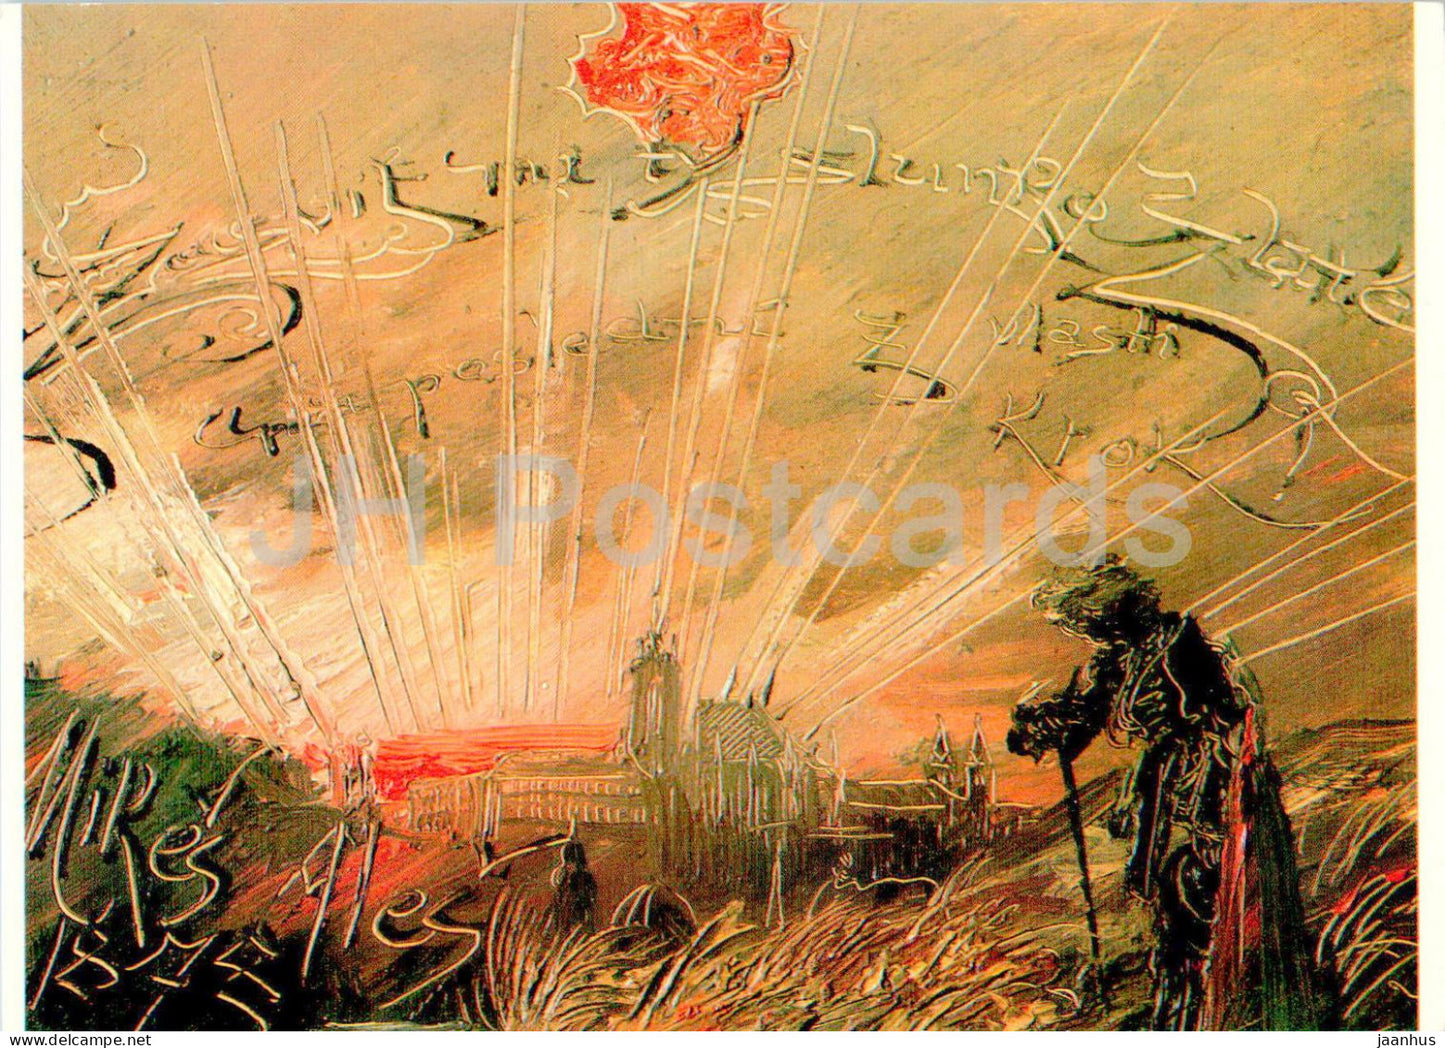 painting by Mikolas Ales - Shine Golden Sun - Czech art - Czech Republic - Czechoslovakia - unused - JH Postcards